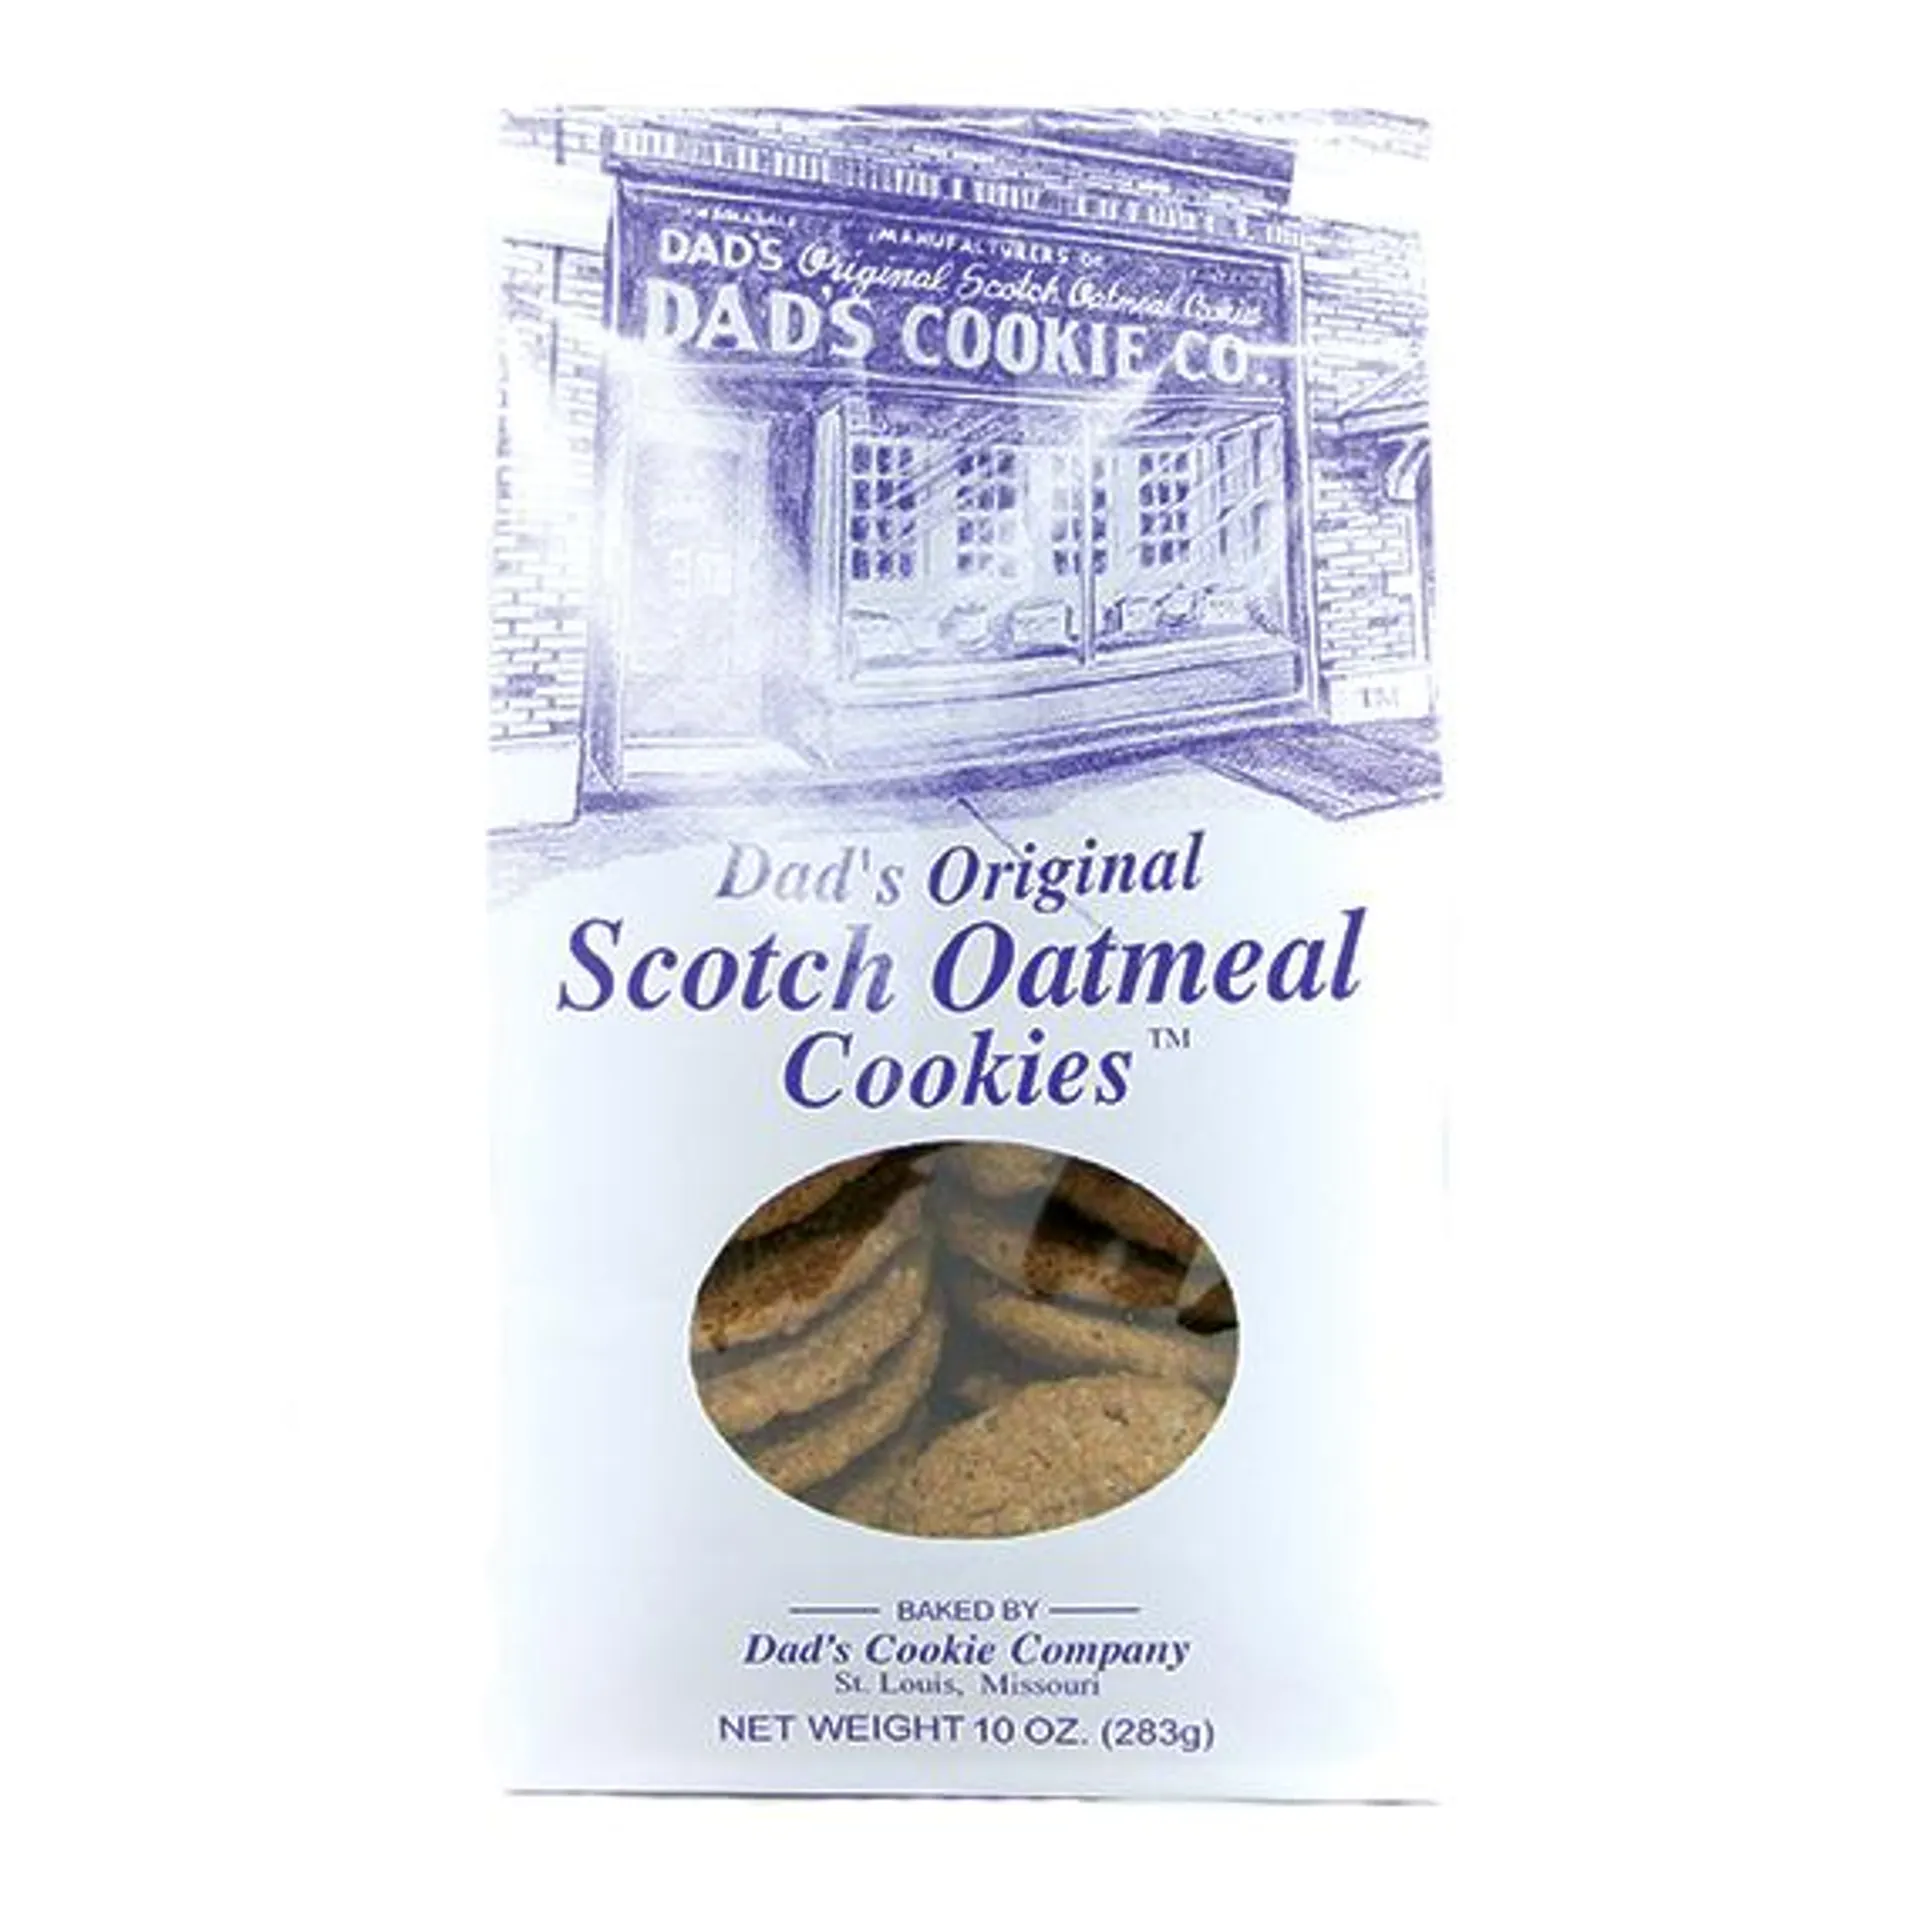 Dad's Original Oatmeal Cookie